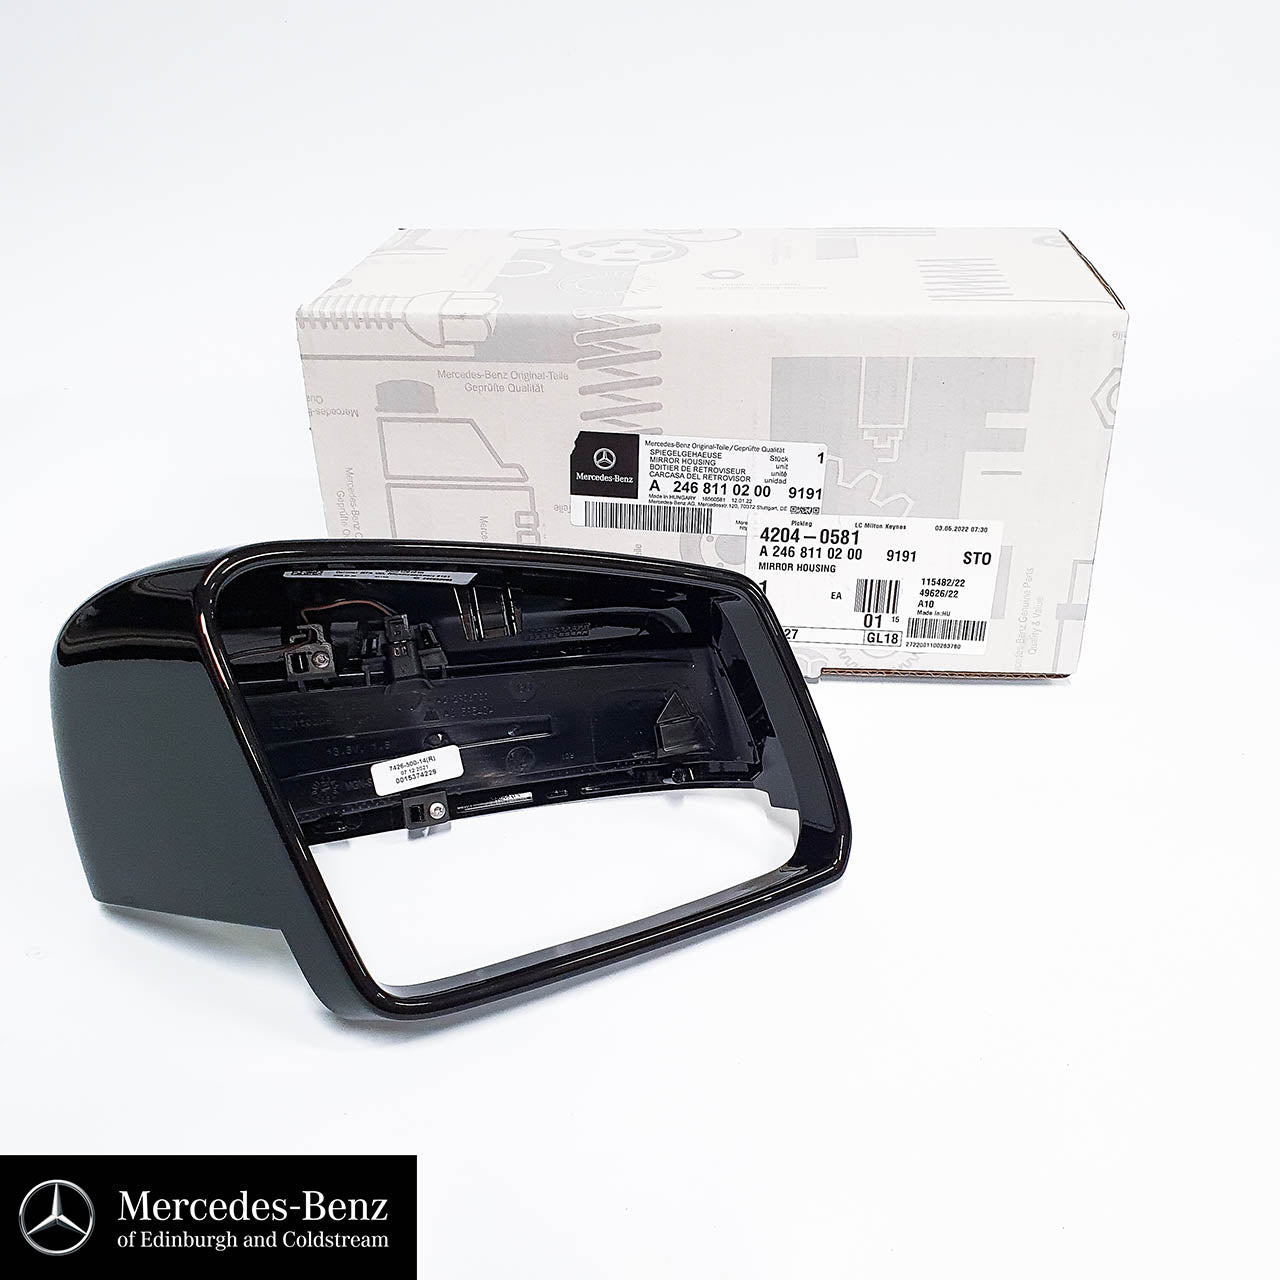 Genuine Mercedes-Benz mirror cover CLA 117 model series